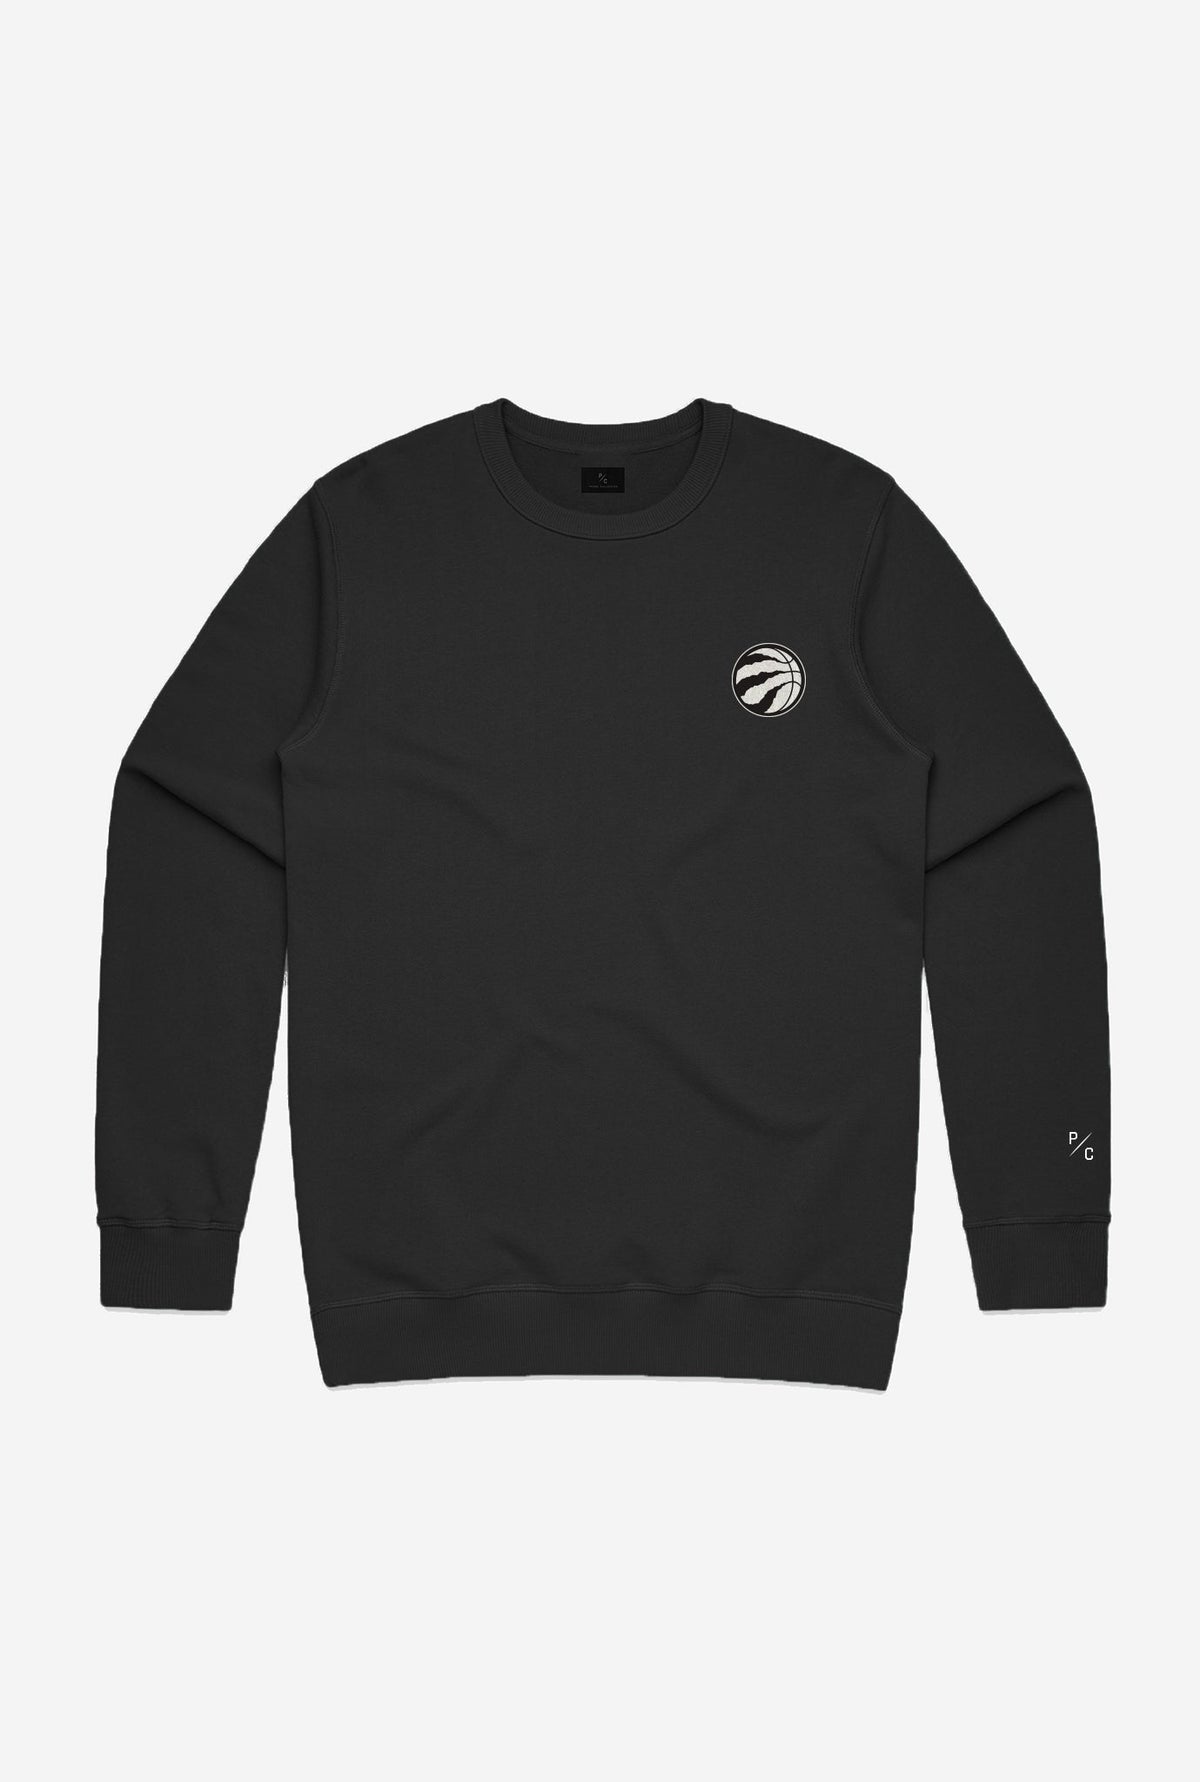 Toronto Raptors Logo Crewneck - Black